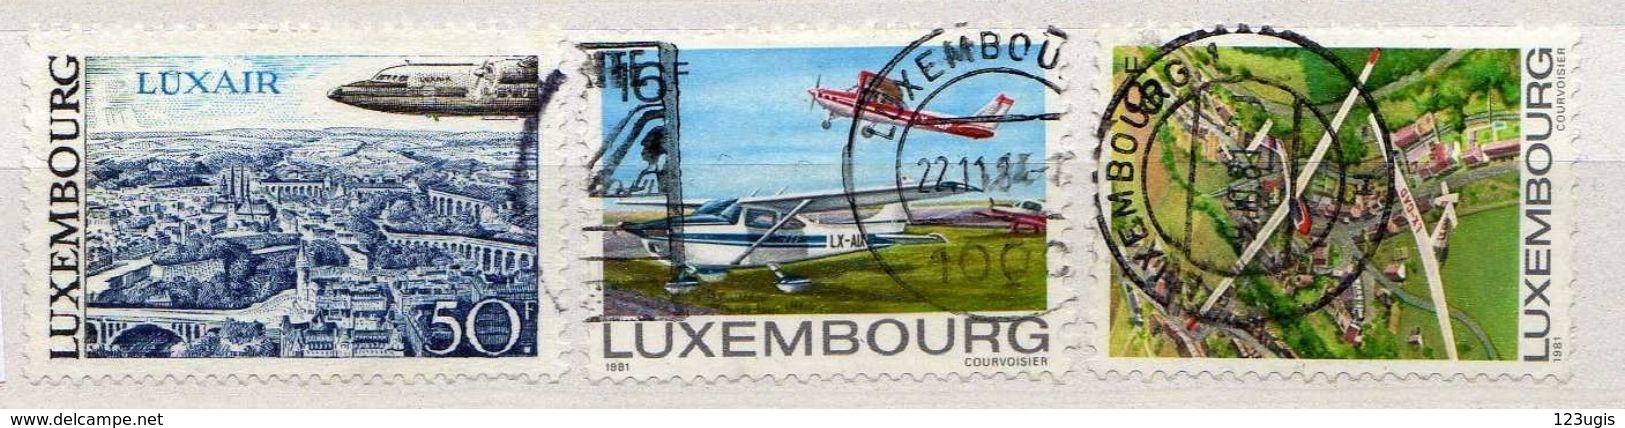 Luxemburg Lot, Gestempelt, Flugpost / Flugzeug / Air Mail / Planes [170717XXI] - Gebruikt